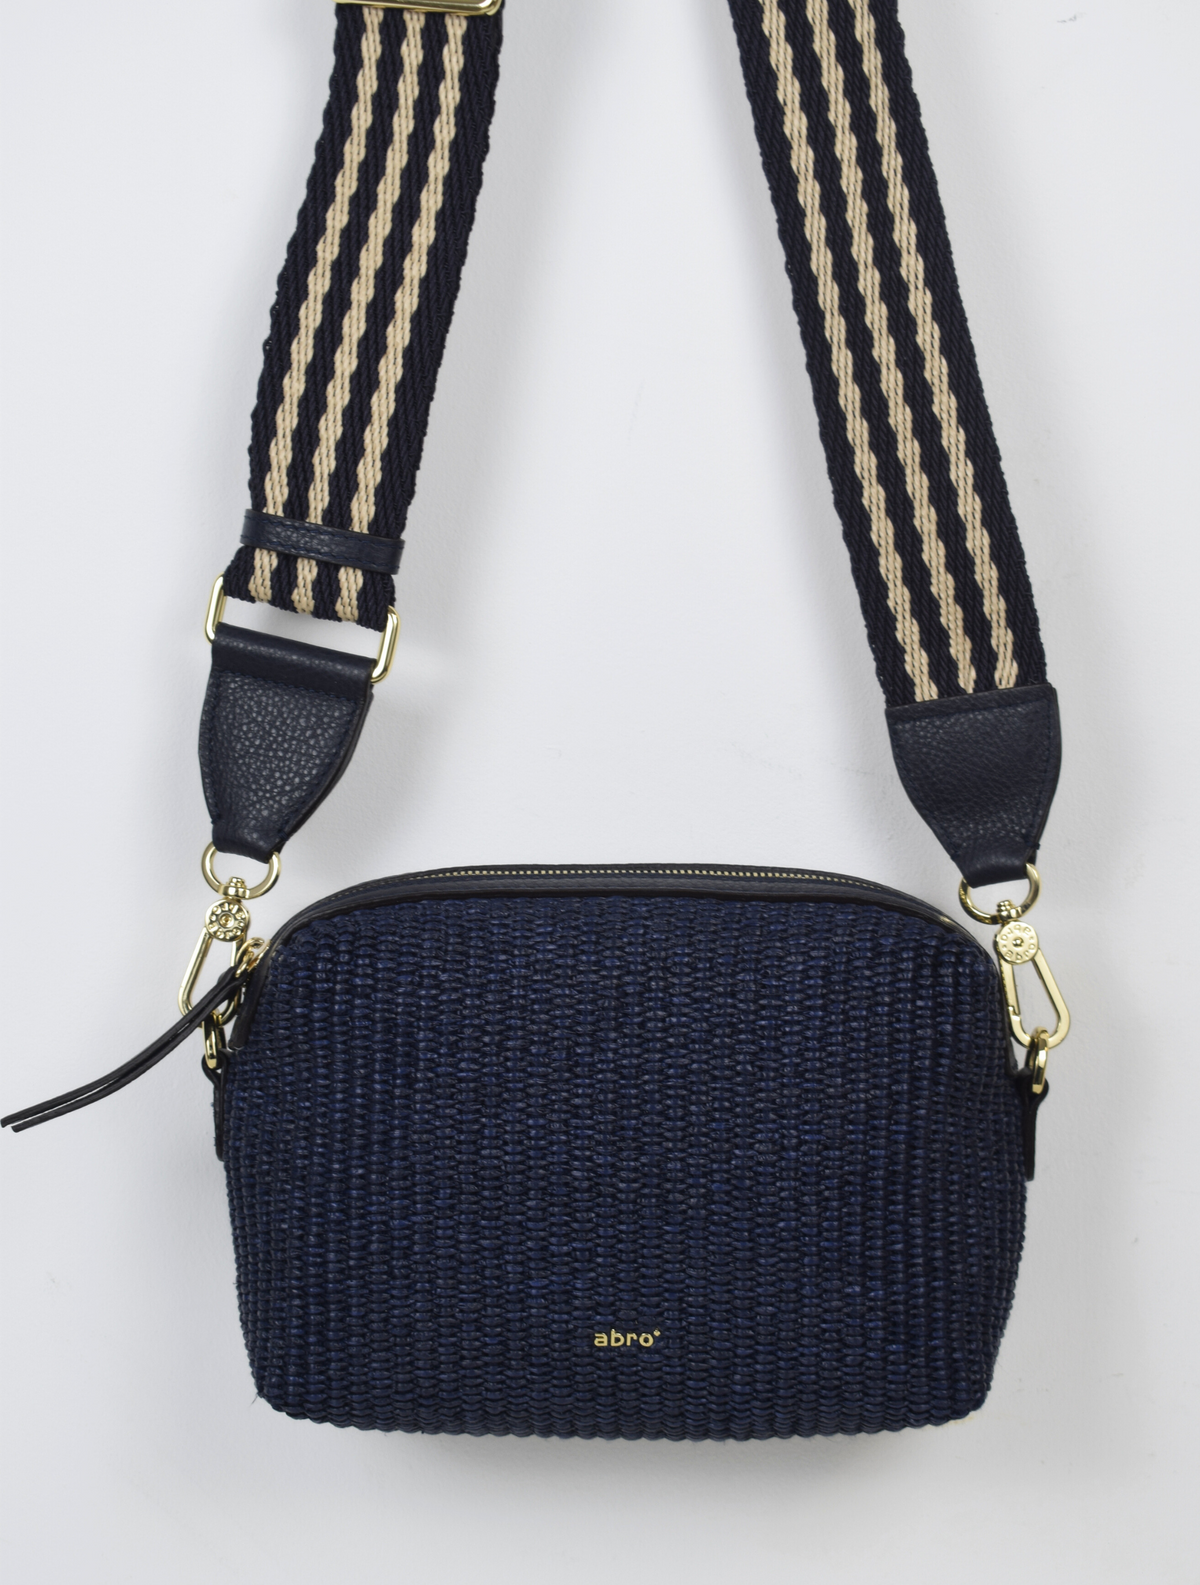 A navy raffia bag with a stripe strap. 